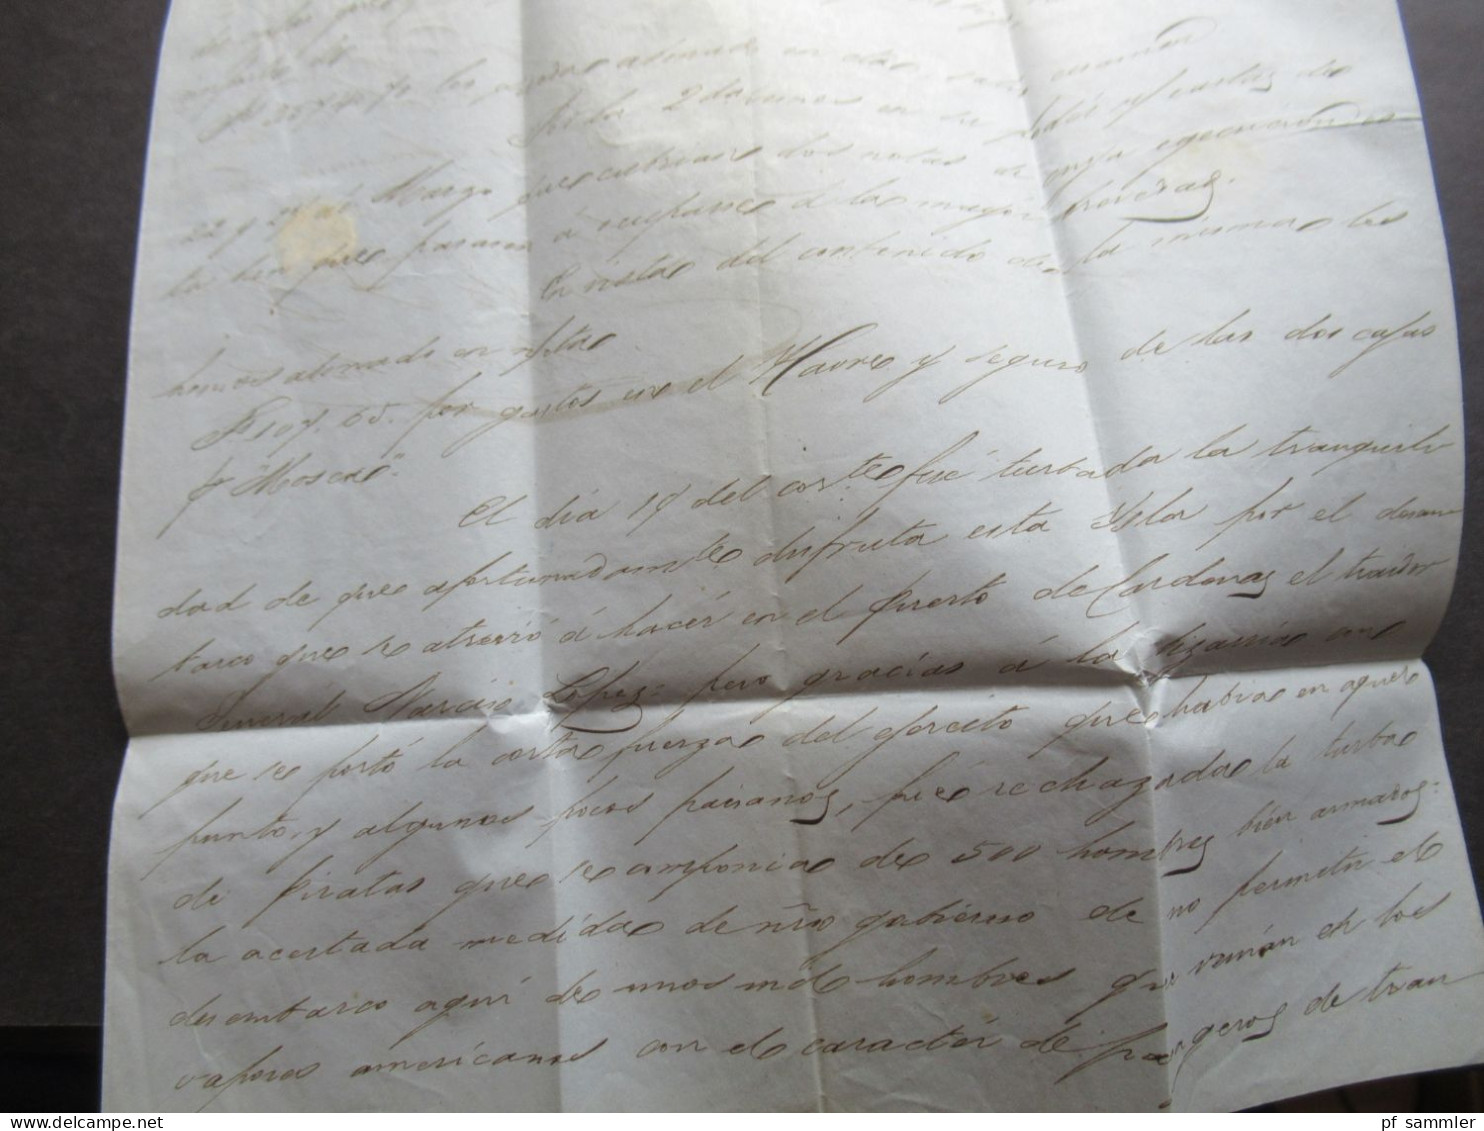 Kuba / Cuba Matanzas 1850 Brief nach Paris Frankreich Stp. Colonies Art 13 und Havana + EM 1850 Faltbrief mit Inhalt!!